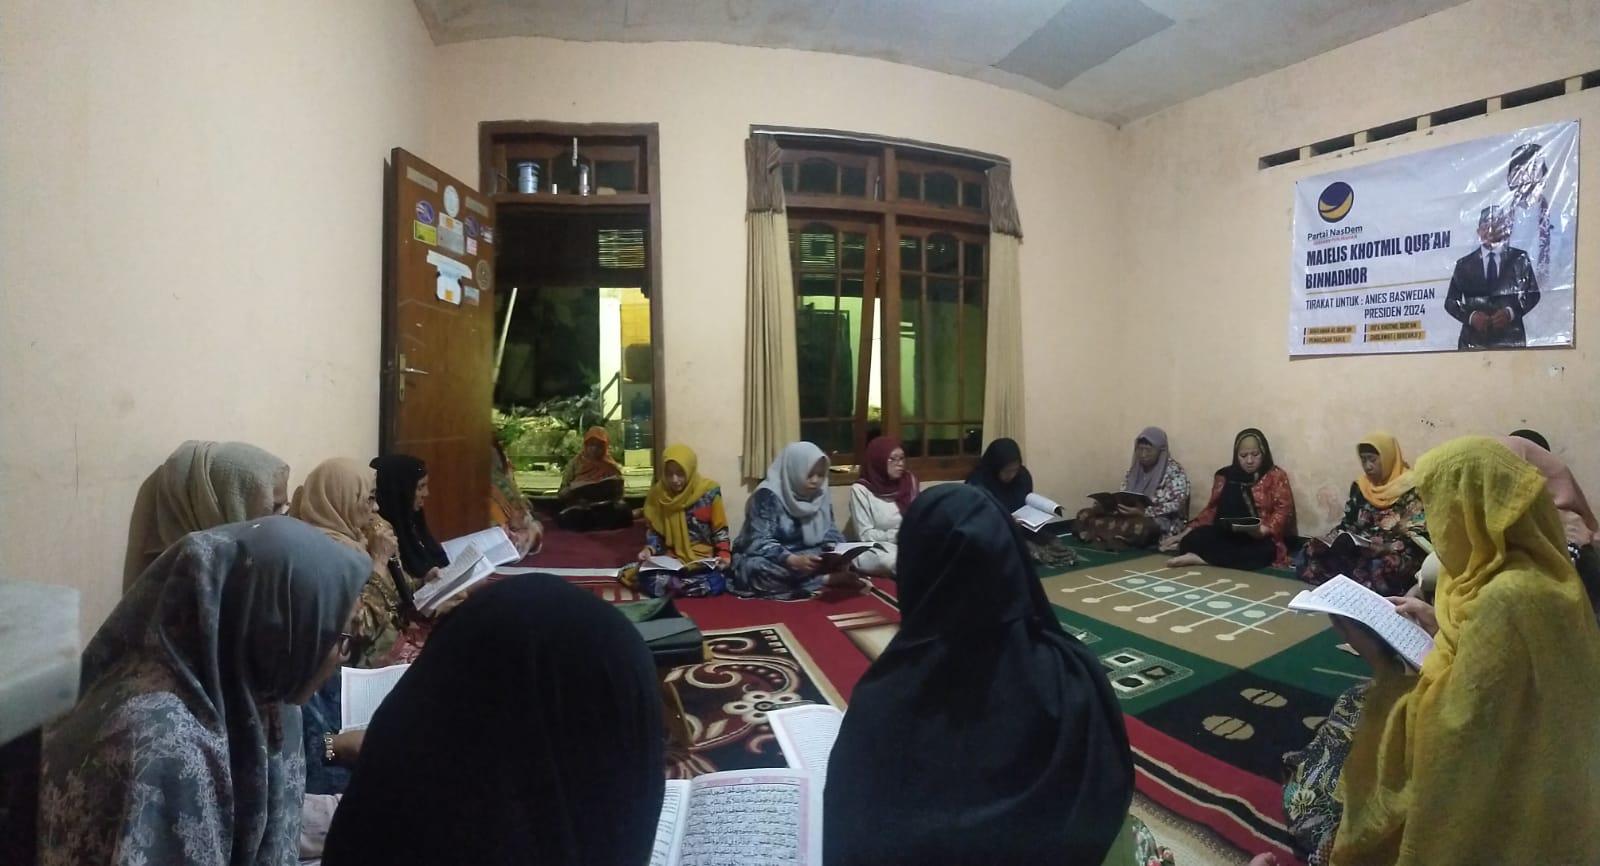 Para Bu Nyai di kompleks Pondok Pesantren Sidosermo dalam di acara Majelis Khotmil Quran Binnadhor bertepatan dengan malam 27 ramadan (Foto / Istimewa)